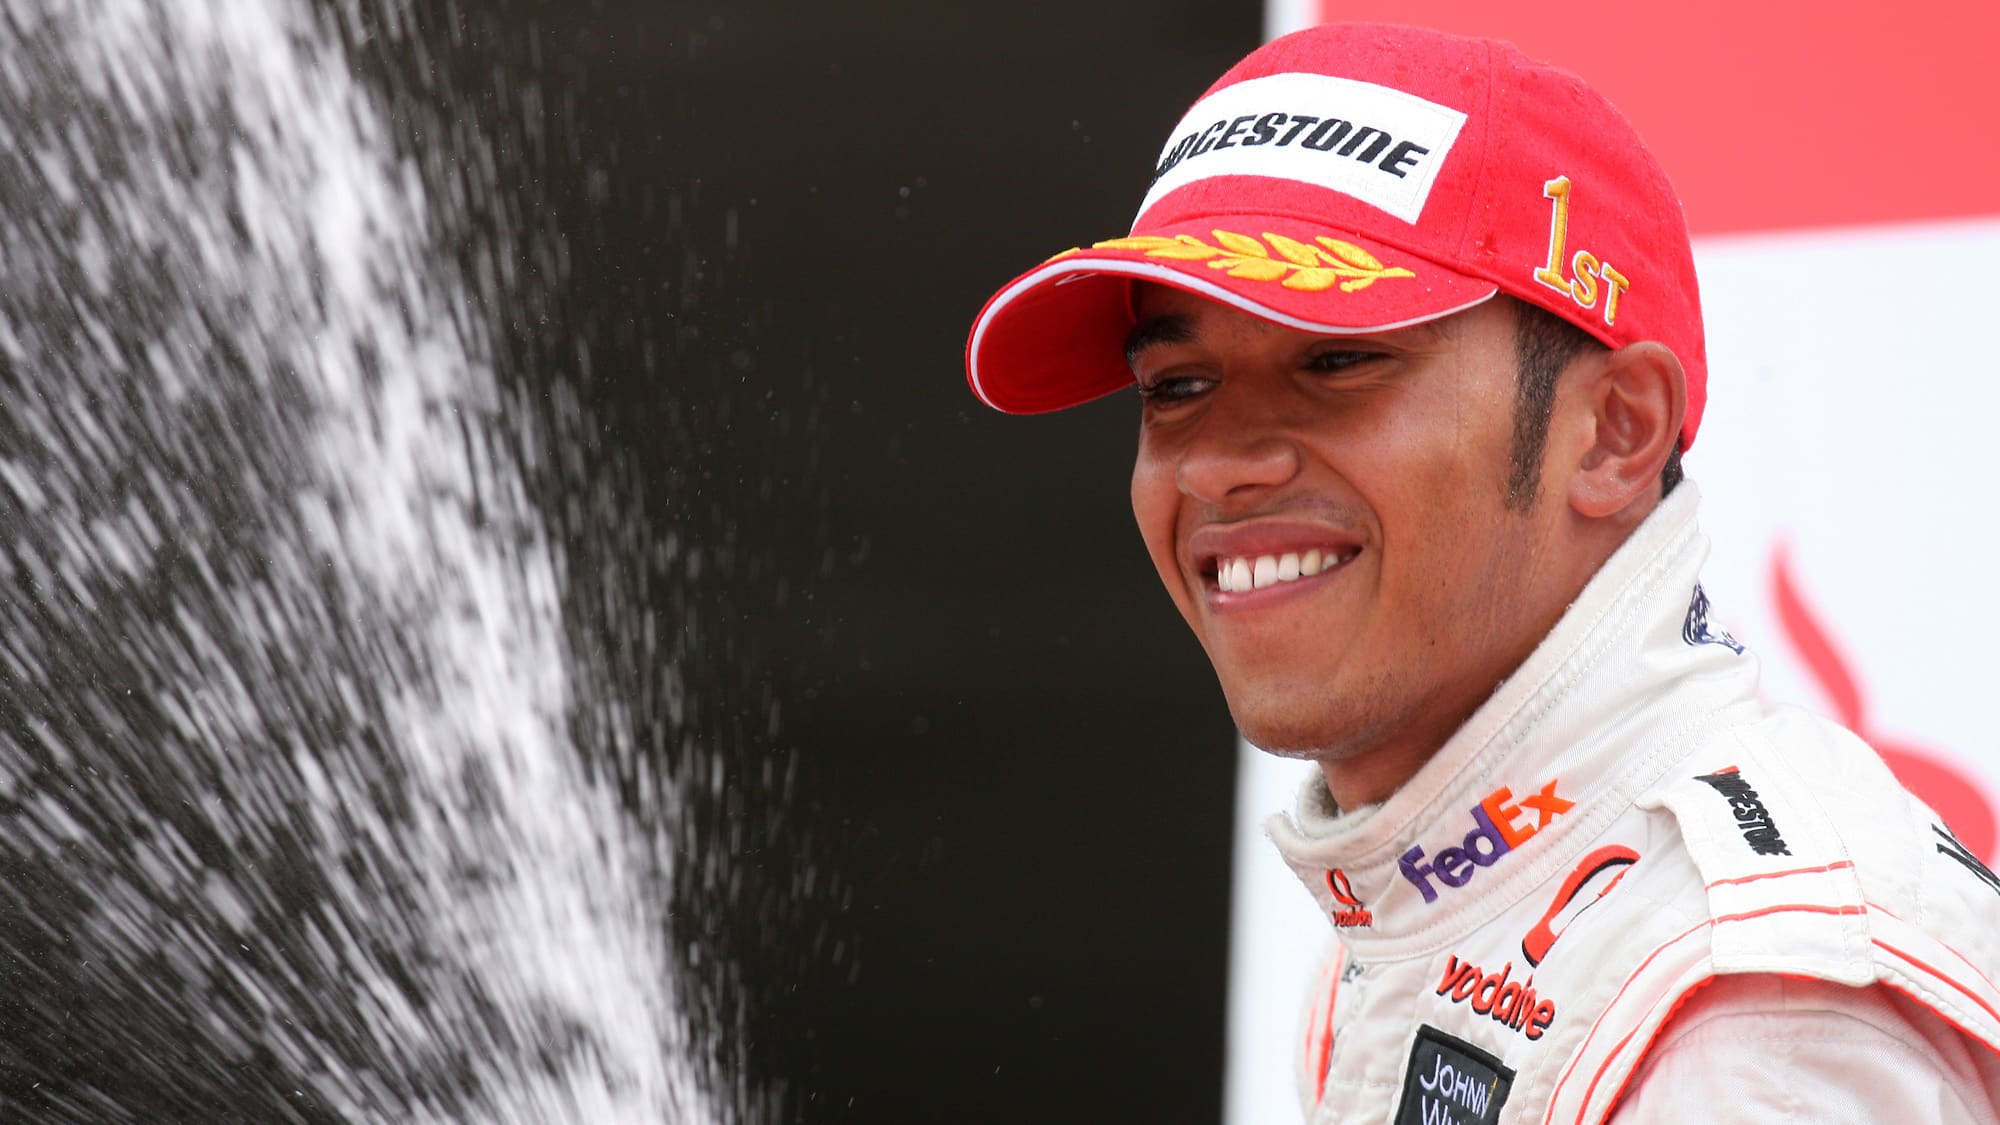 Lewis Hamilton sprays champagne after winning the 2008 British Grand Prix